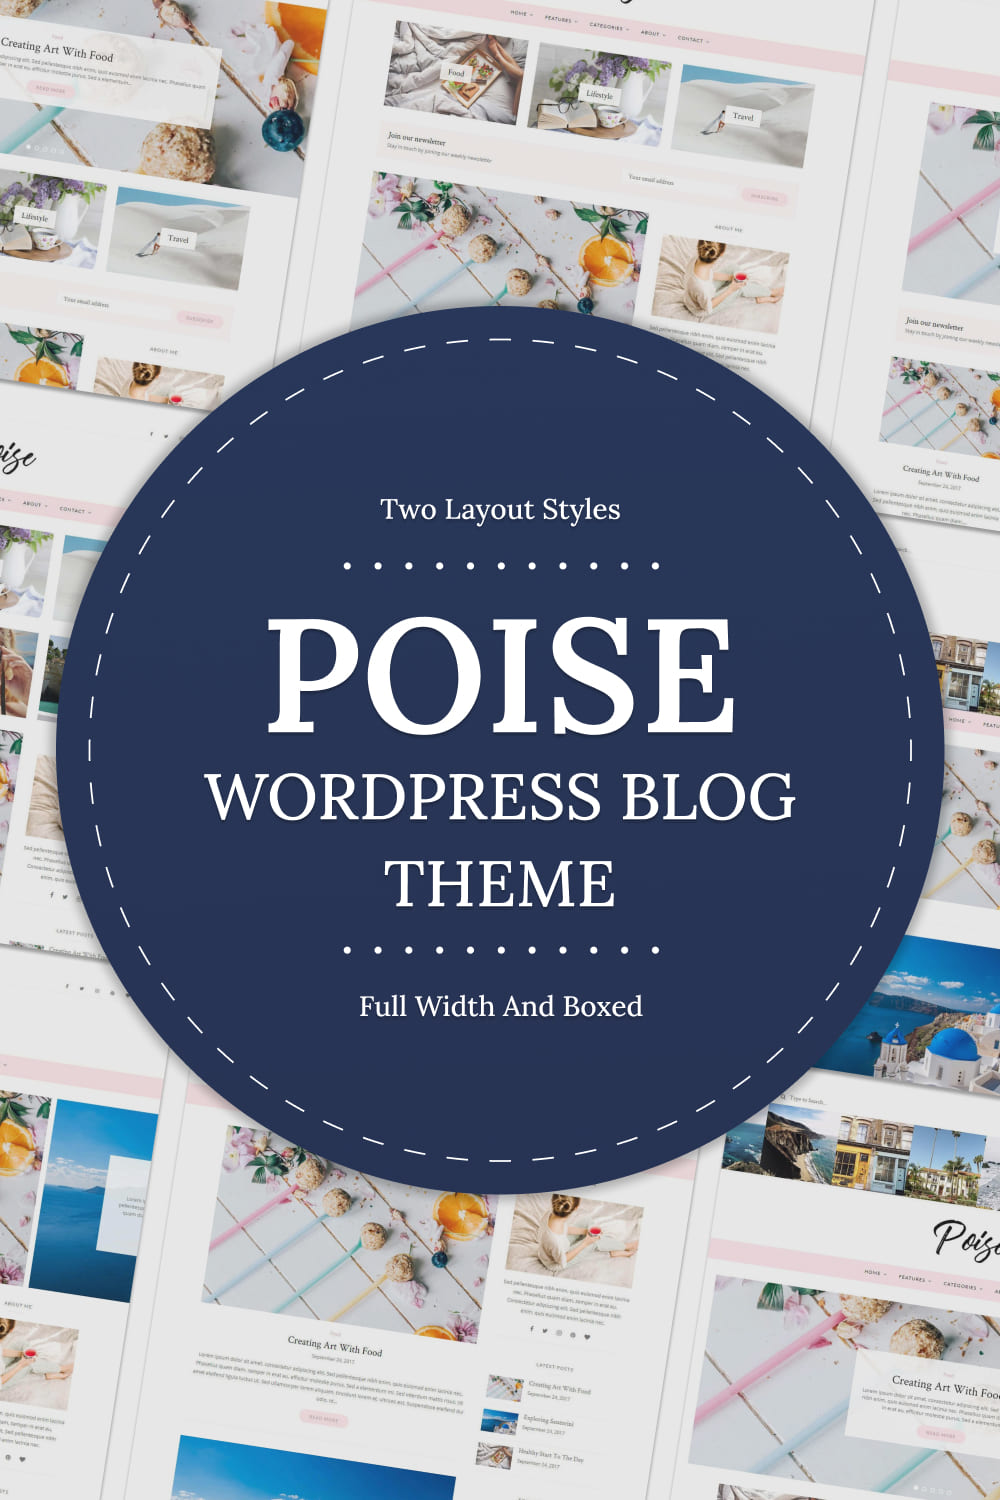 Poise - WordPress Blog Theme - Pinterest.